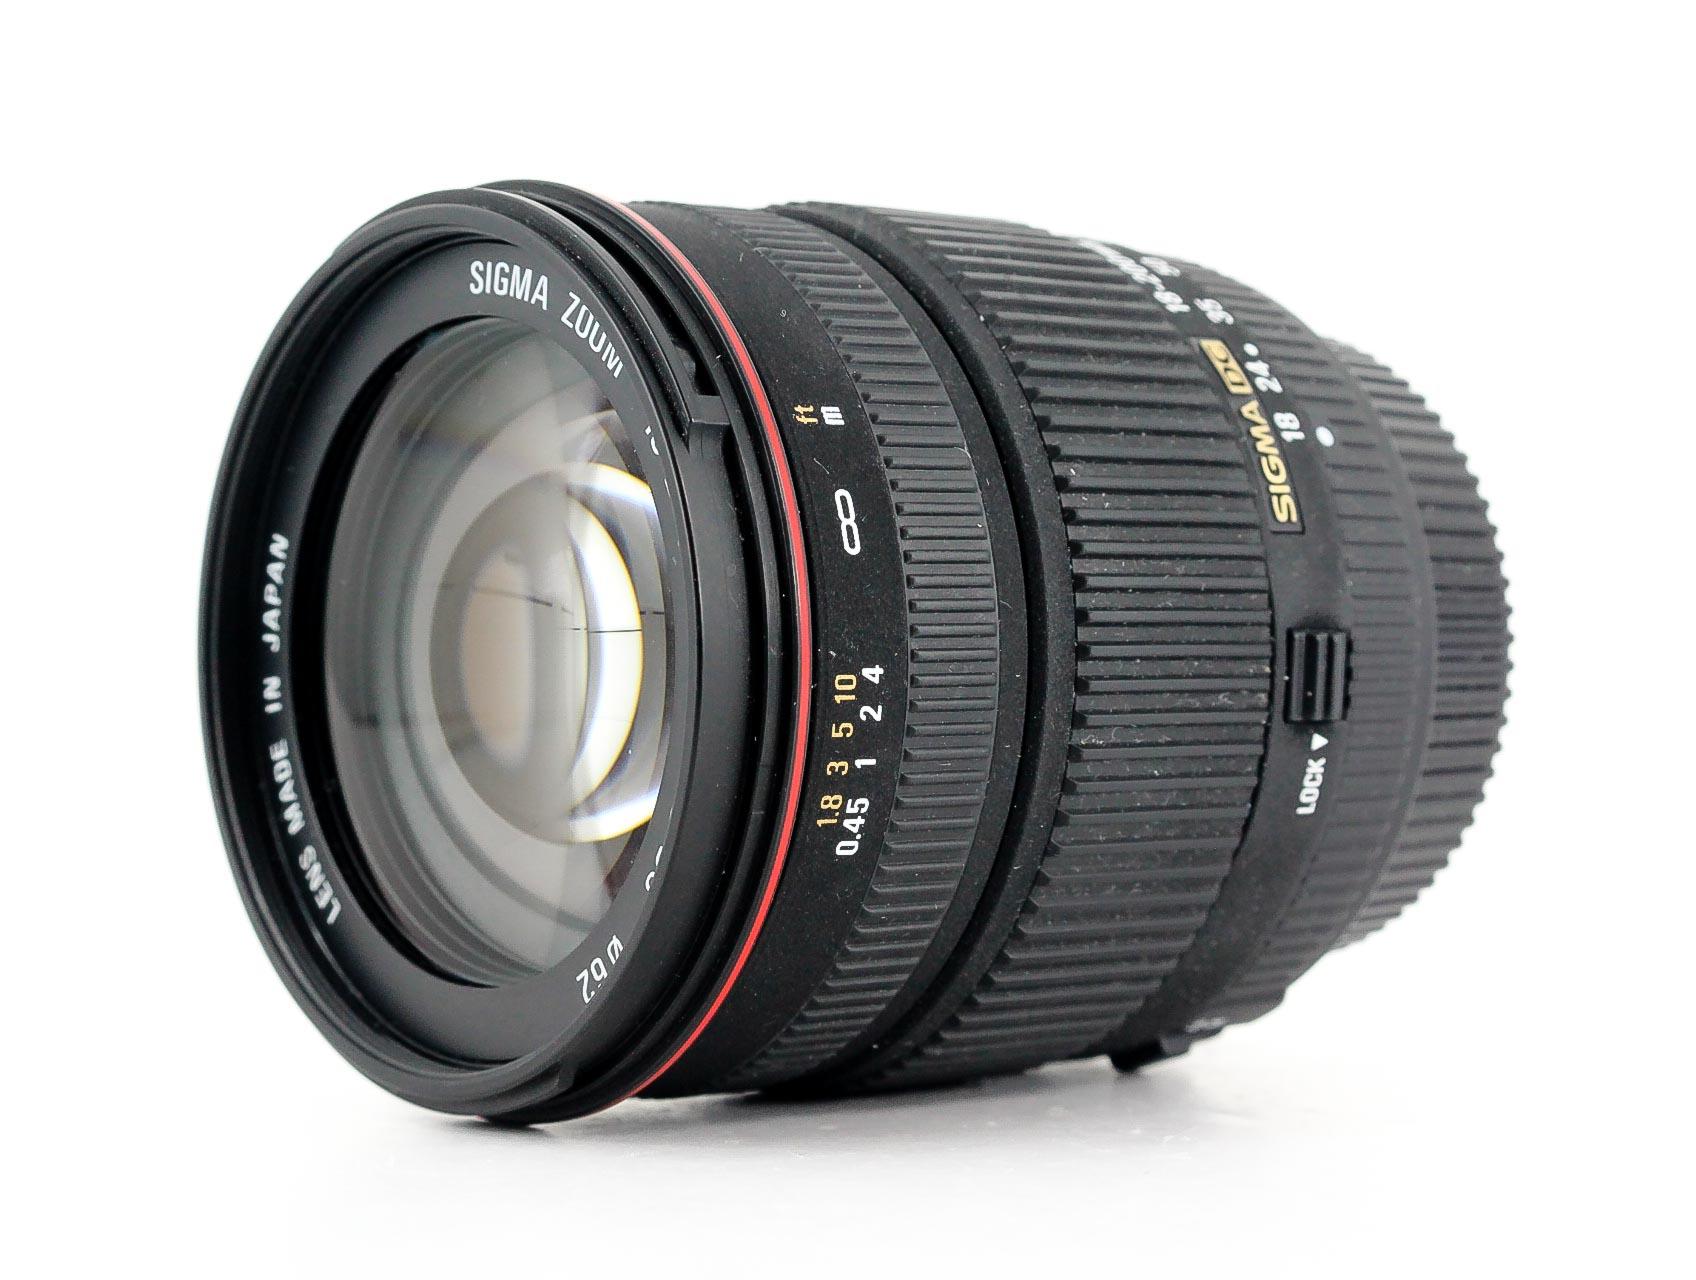 Sigma 18 200mm. EF-S 18-200. Sigma 18-200mm 1:3.5-6.3 вс os HSM Nikon.